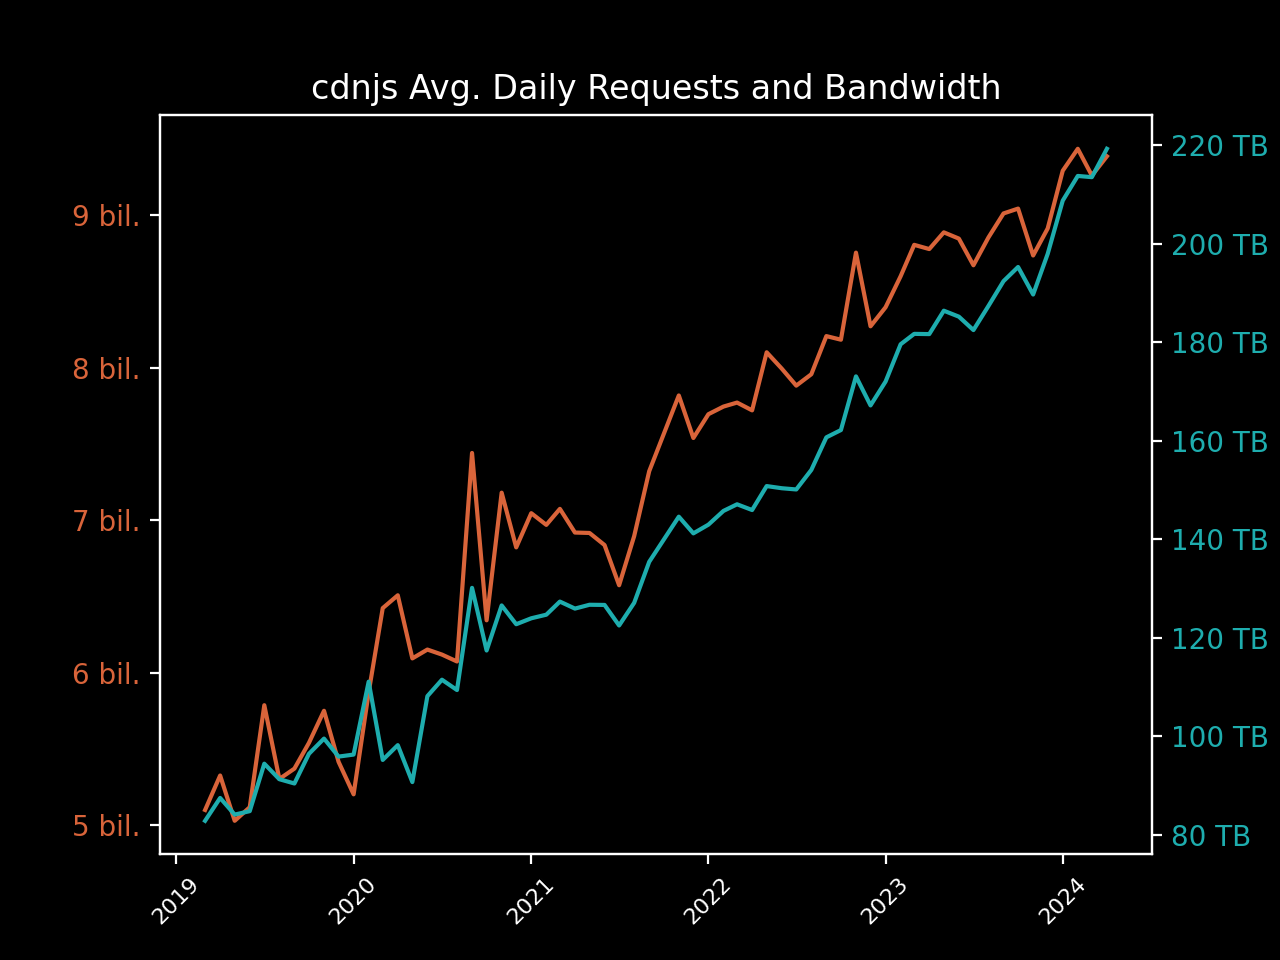 cdnjs avg. daily requests & bandwidth graph